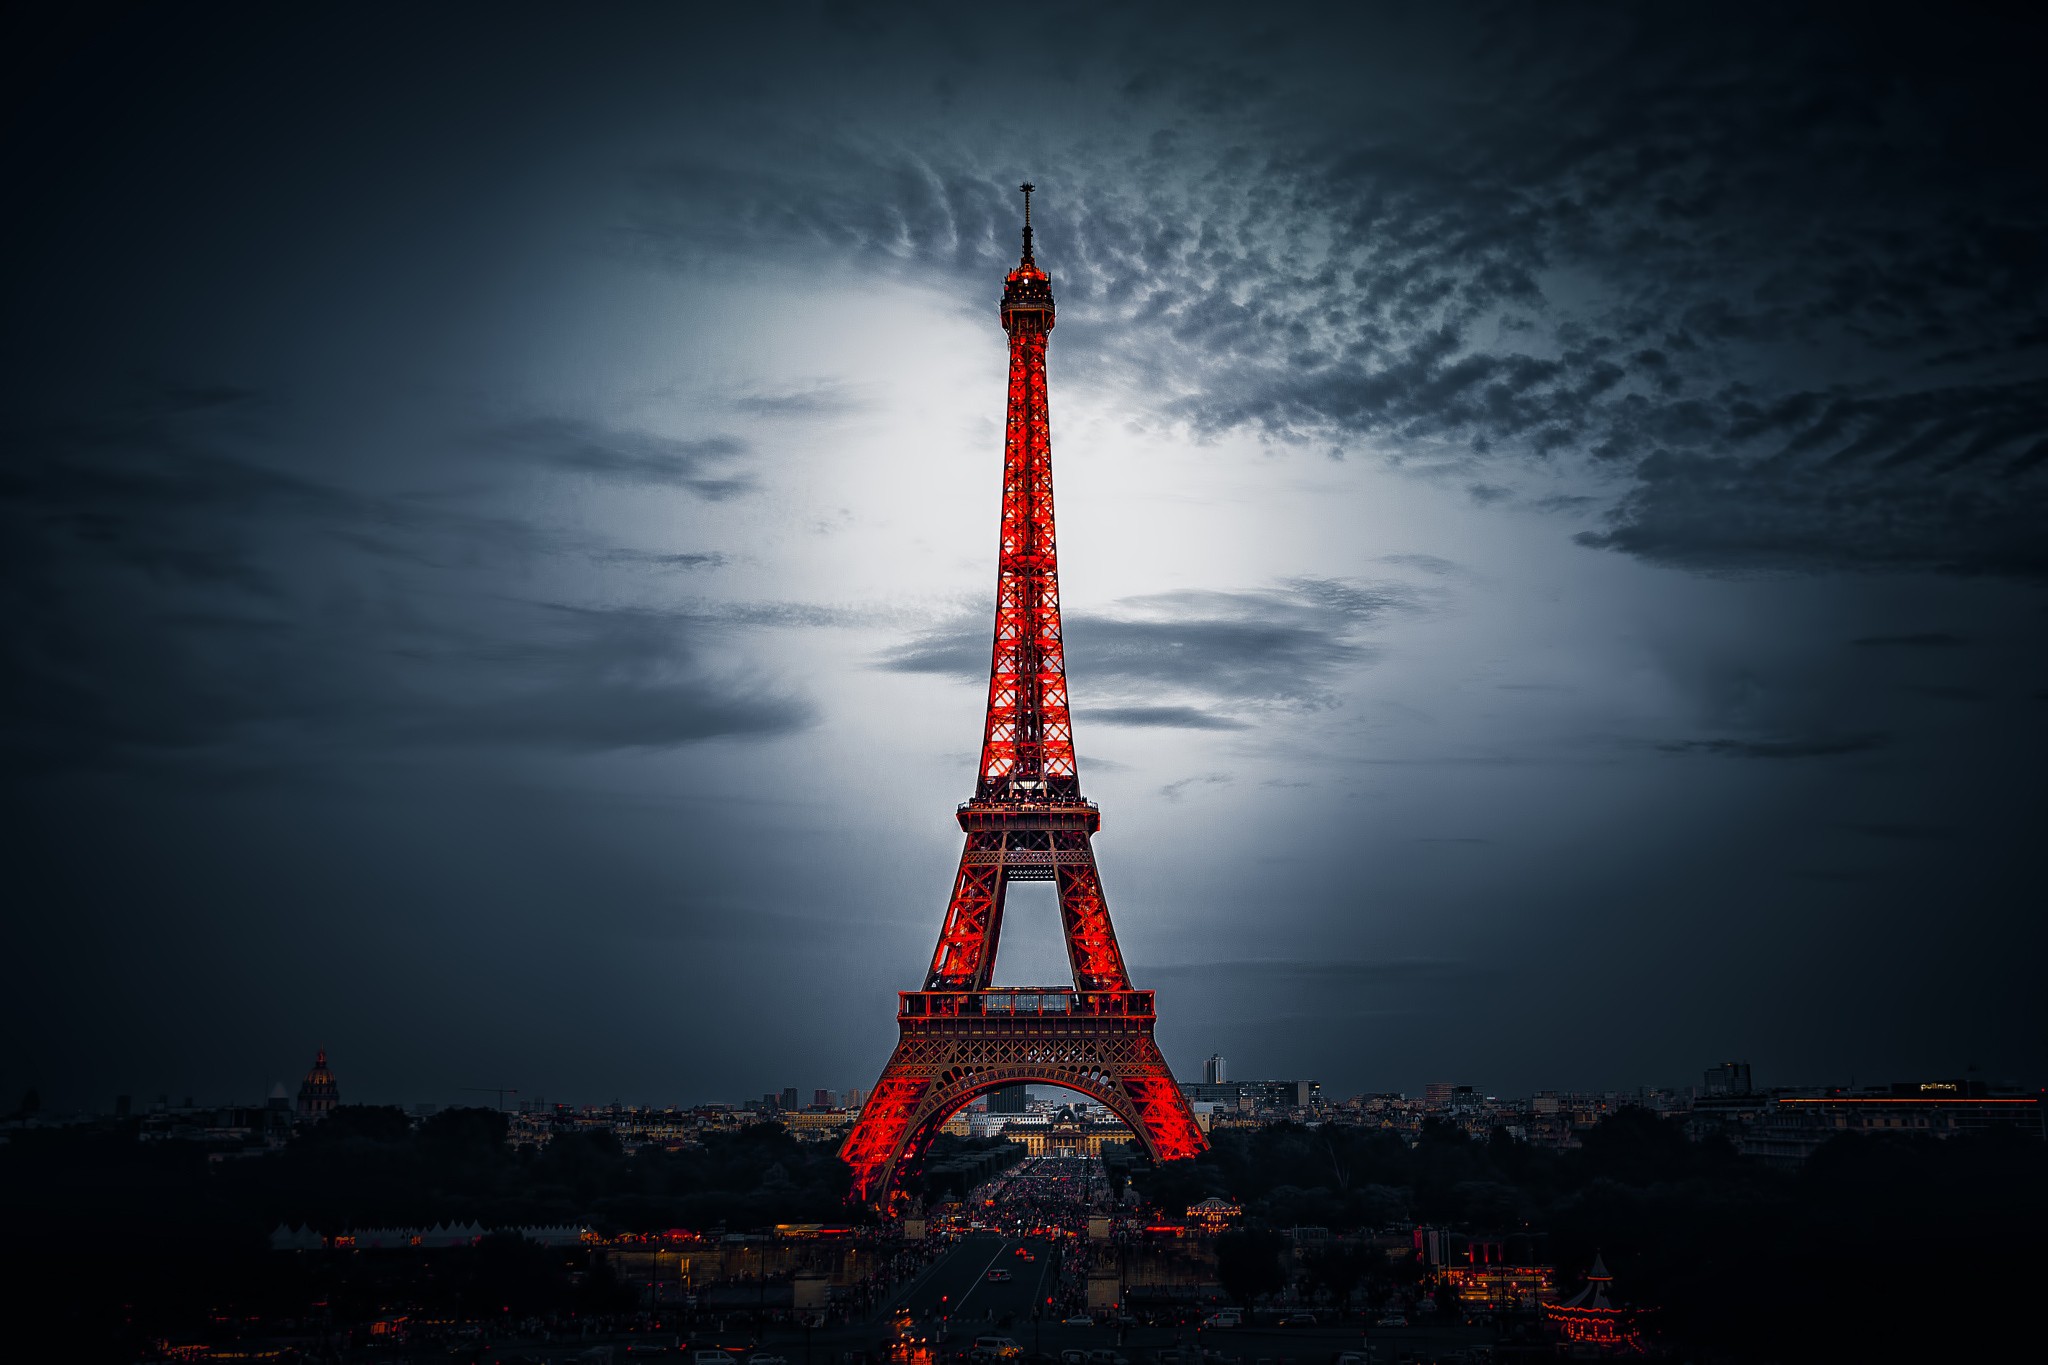 General 2048x1365 Eiffel Tower cityscape France sky night landmark Europe